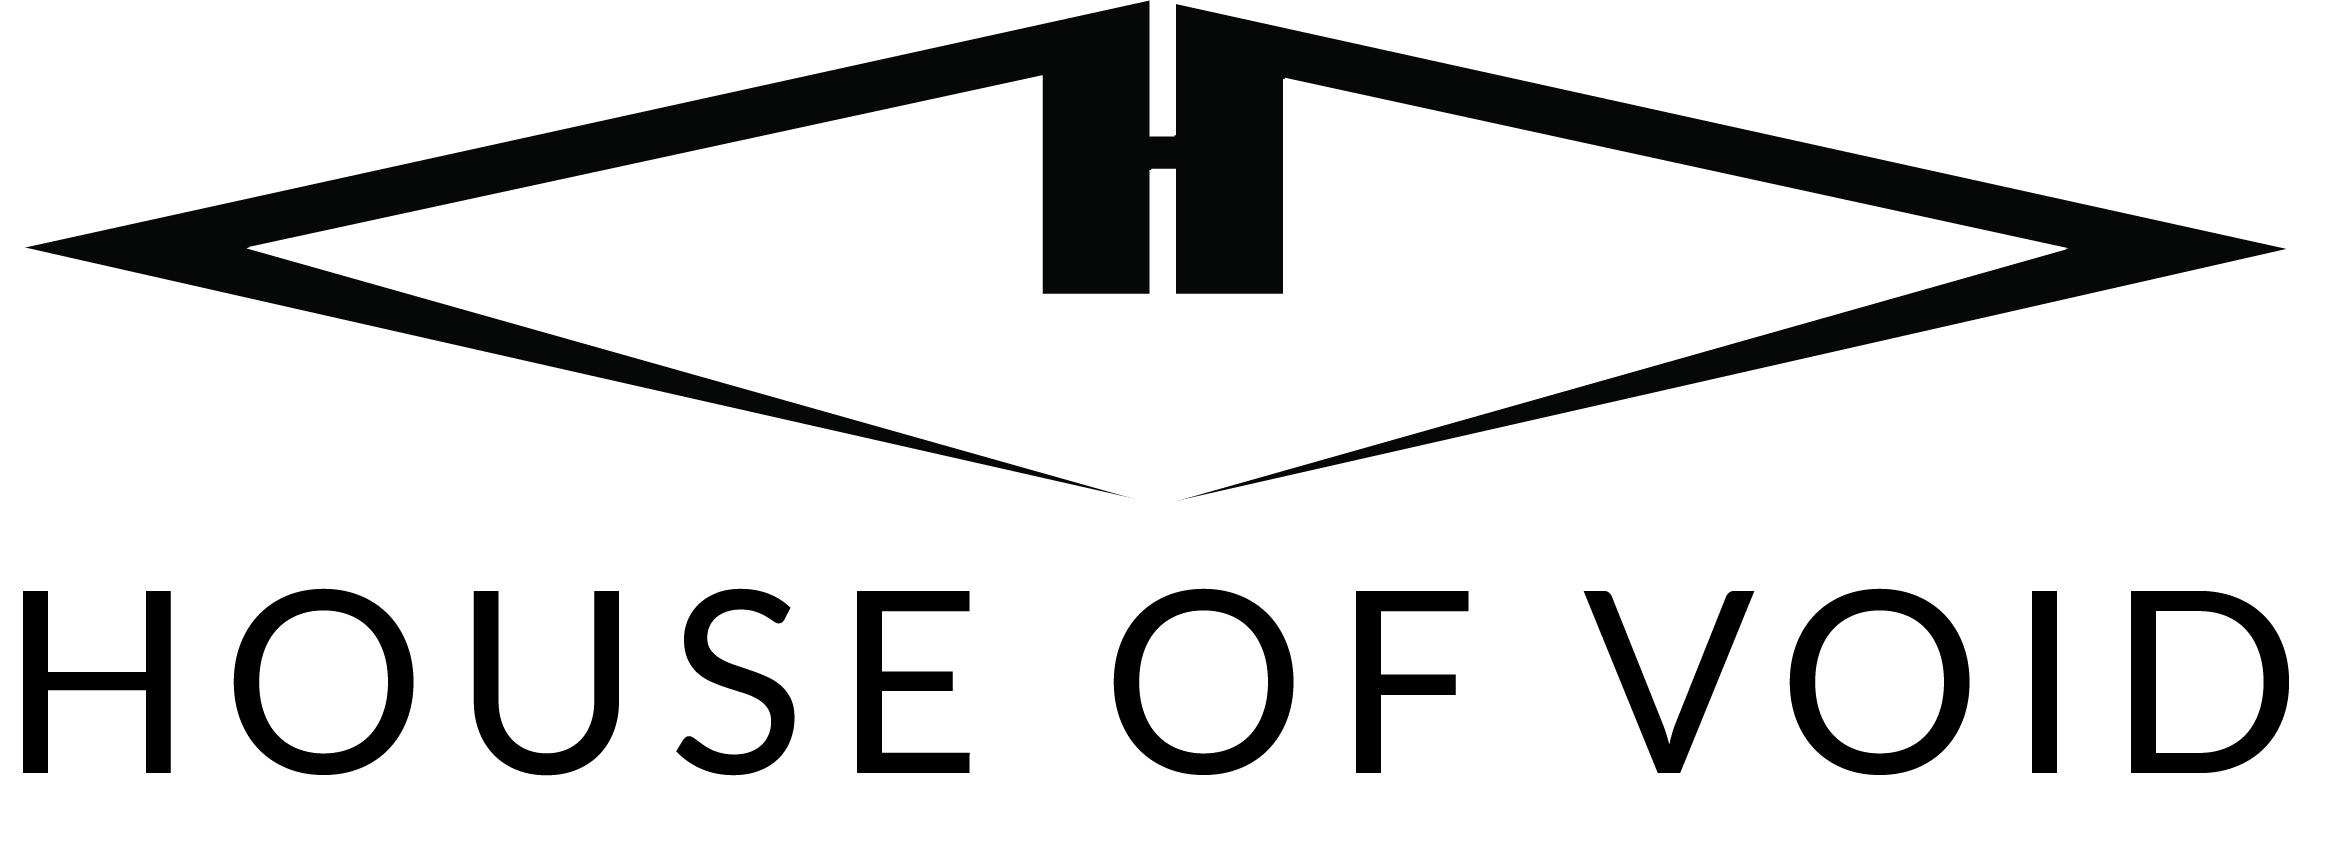 houseofvoid Logo